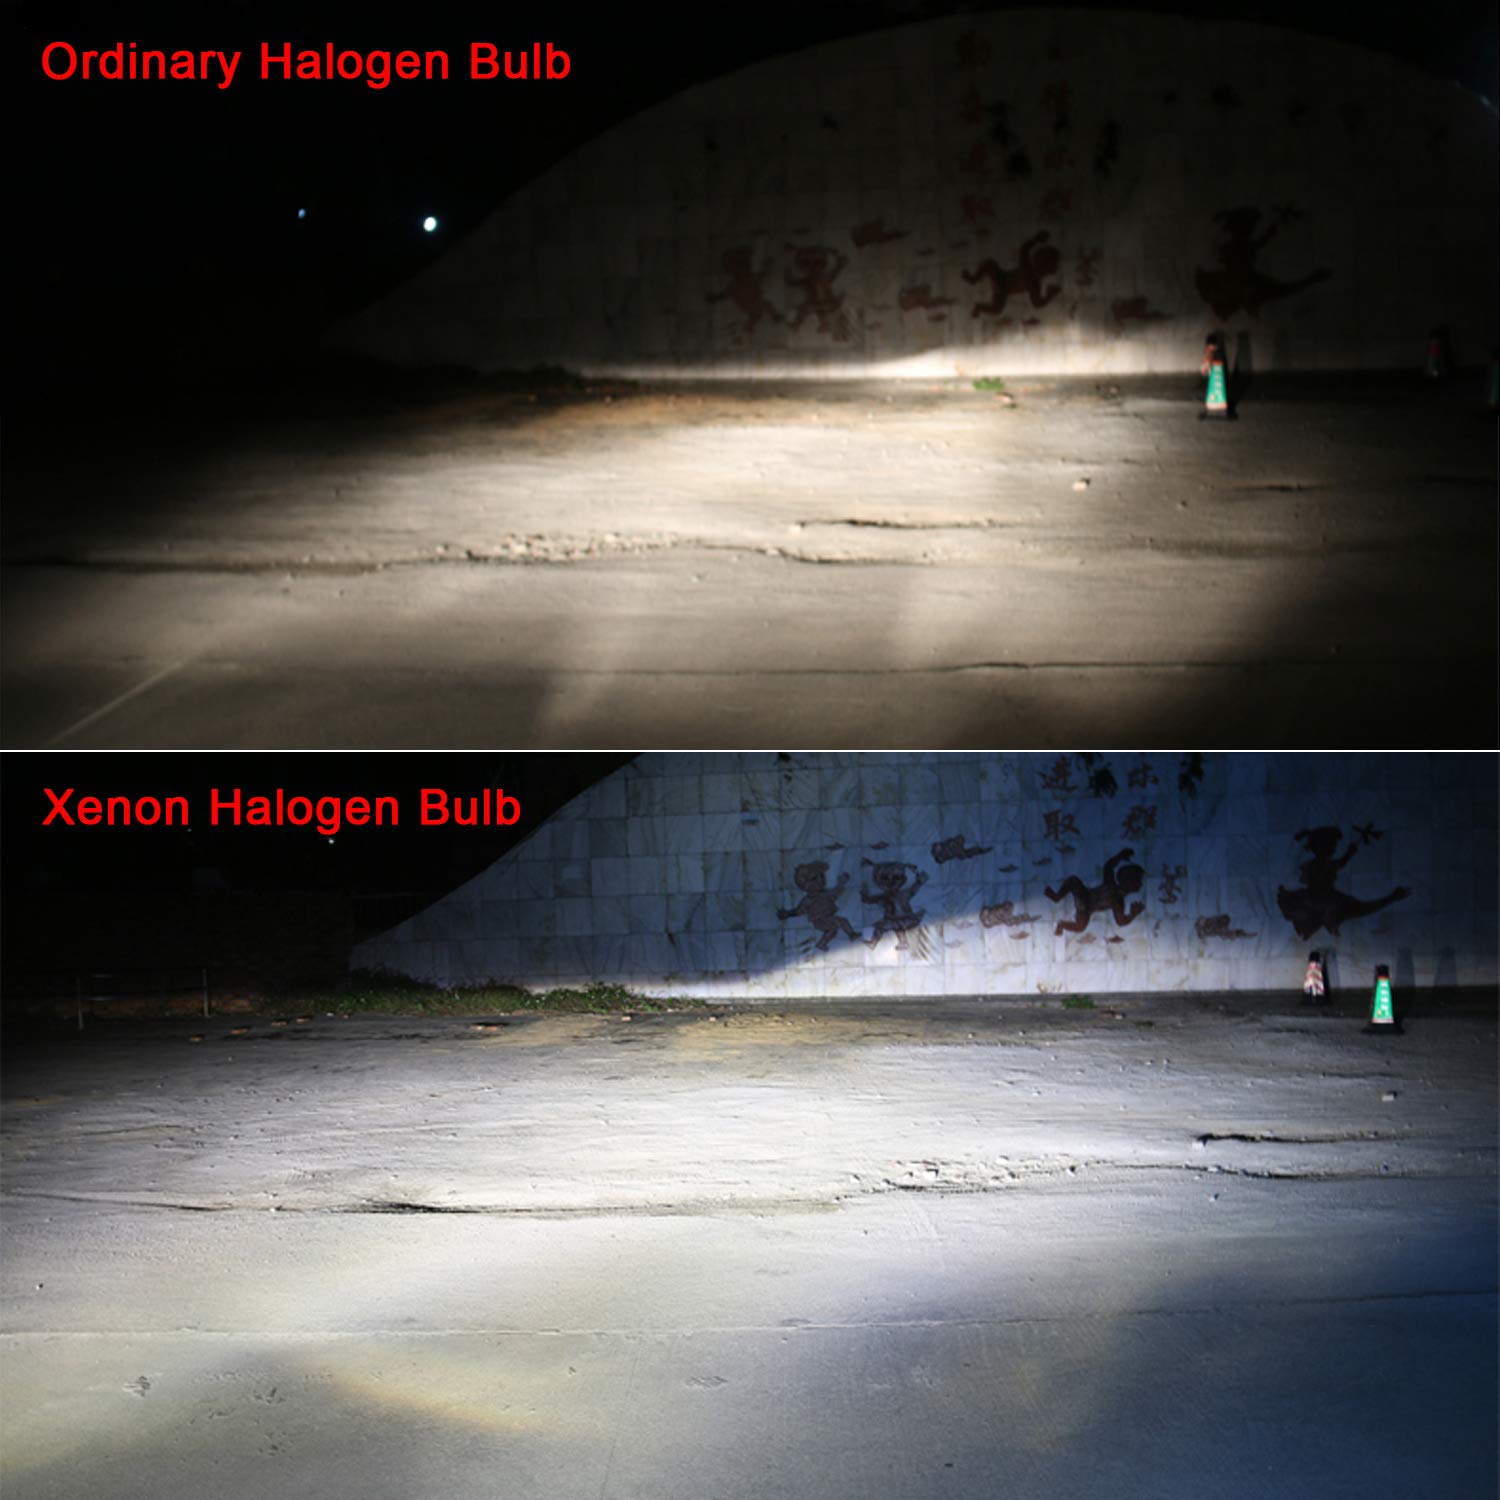 H7 100W 12V Ultra White Light Xenon Halogen Automatic Headlight Bulb 5000K  High Brightness Color Temperature (Pack of 2)